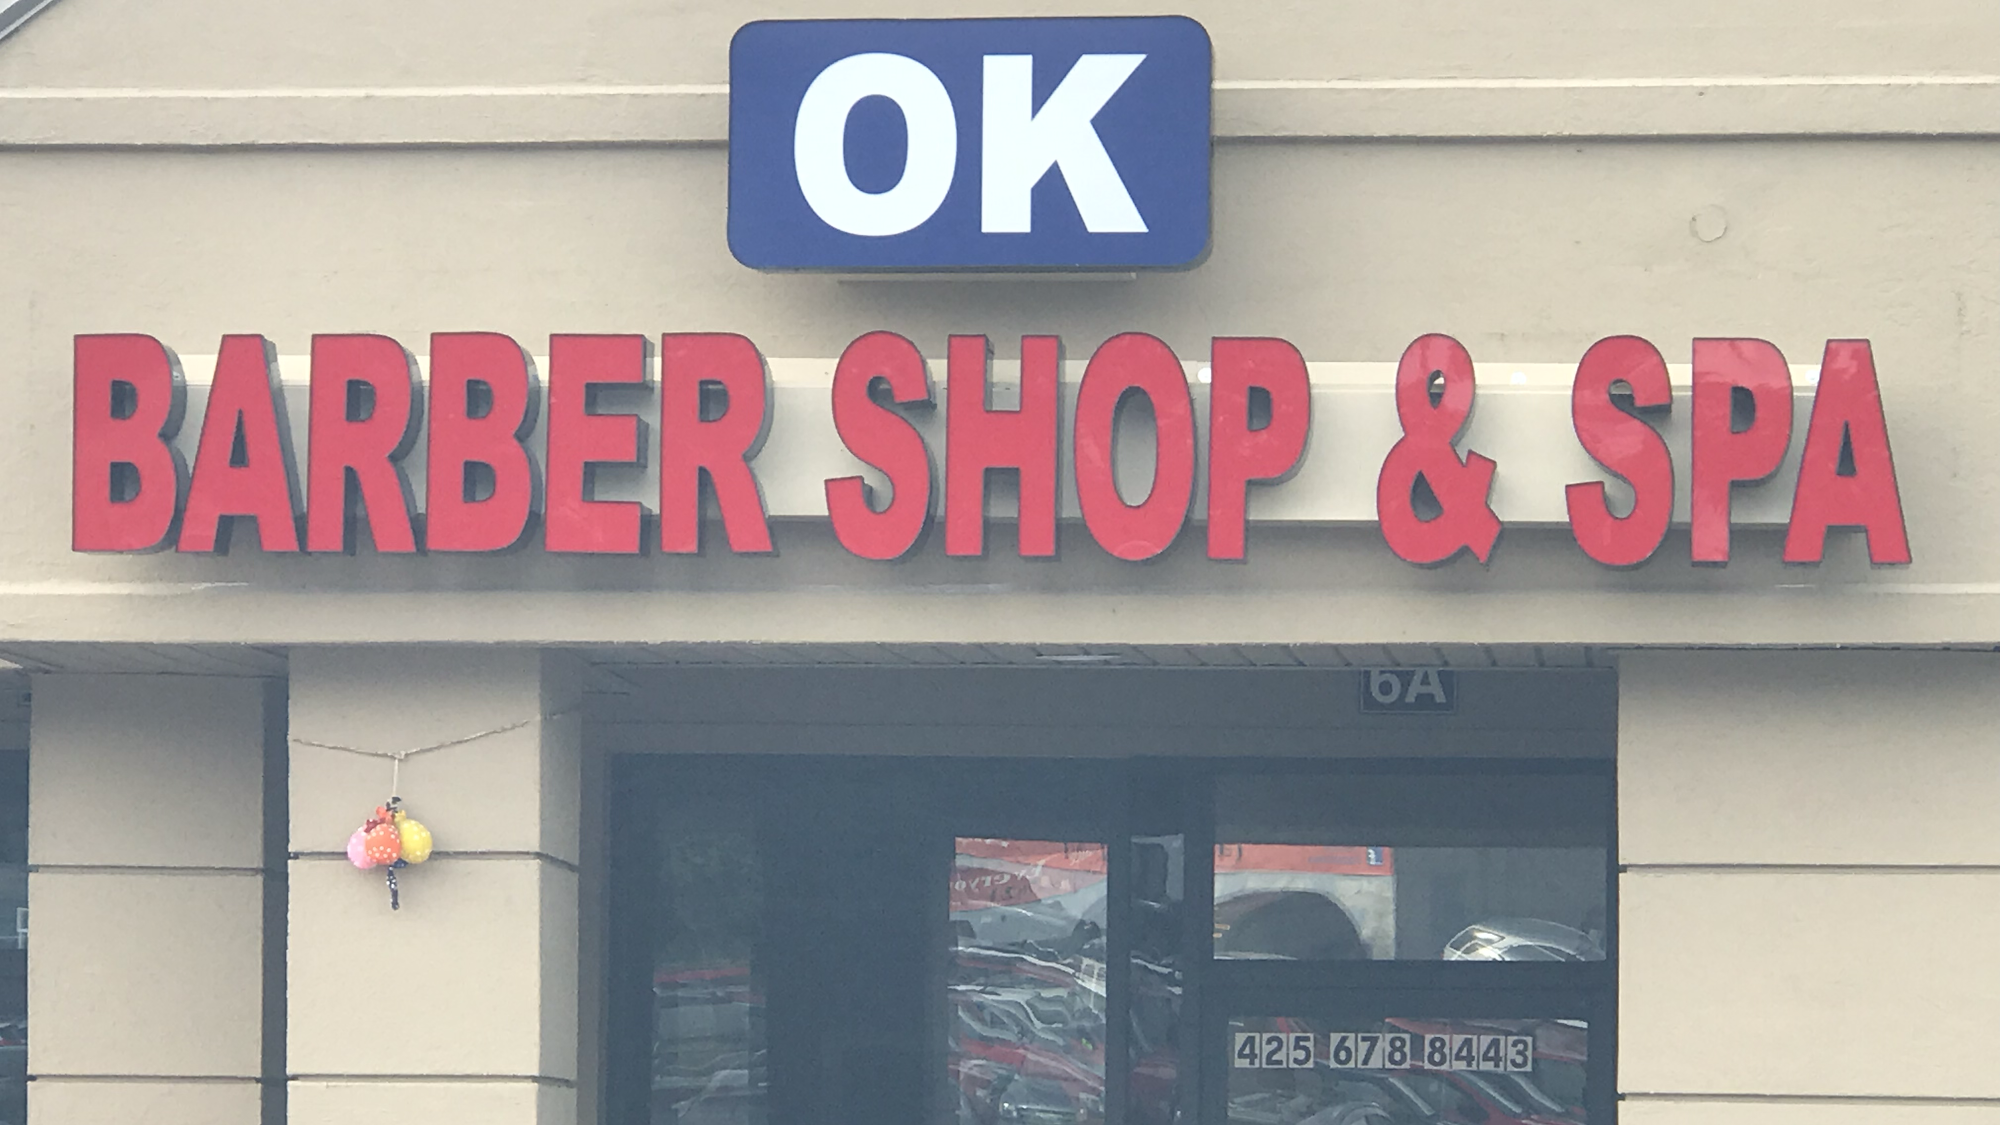 OK Barber Shop & Spa